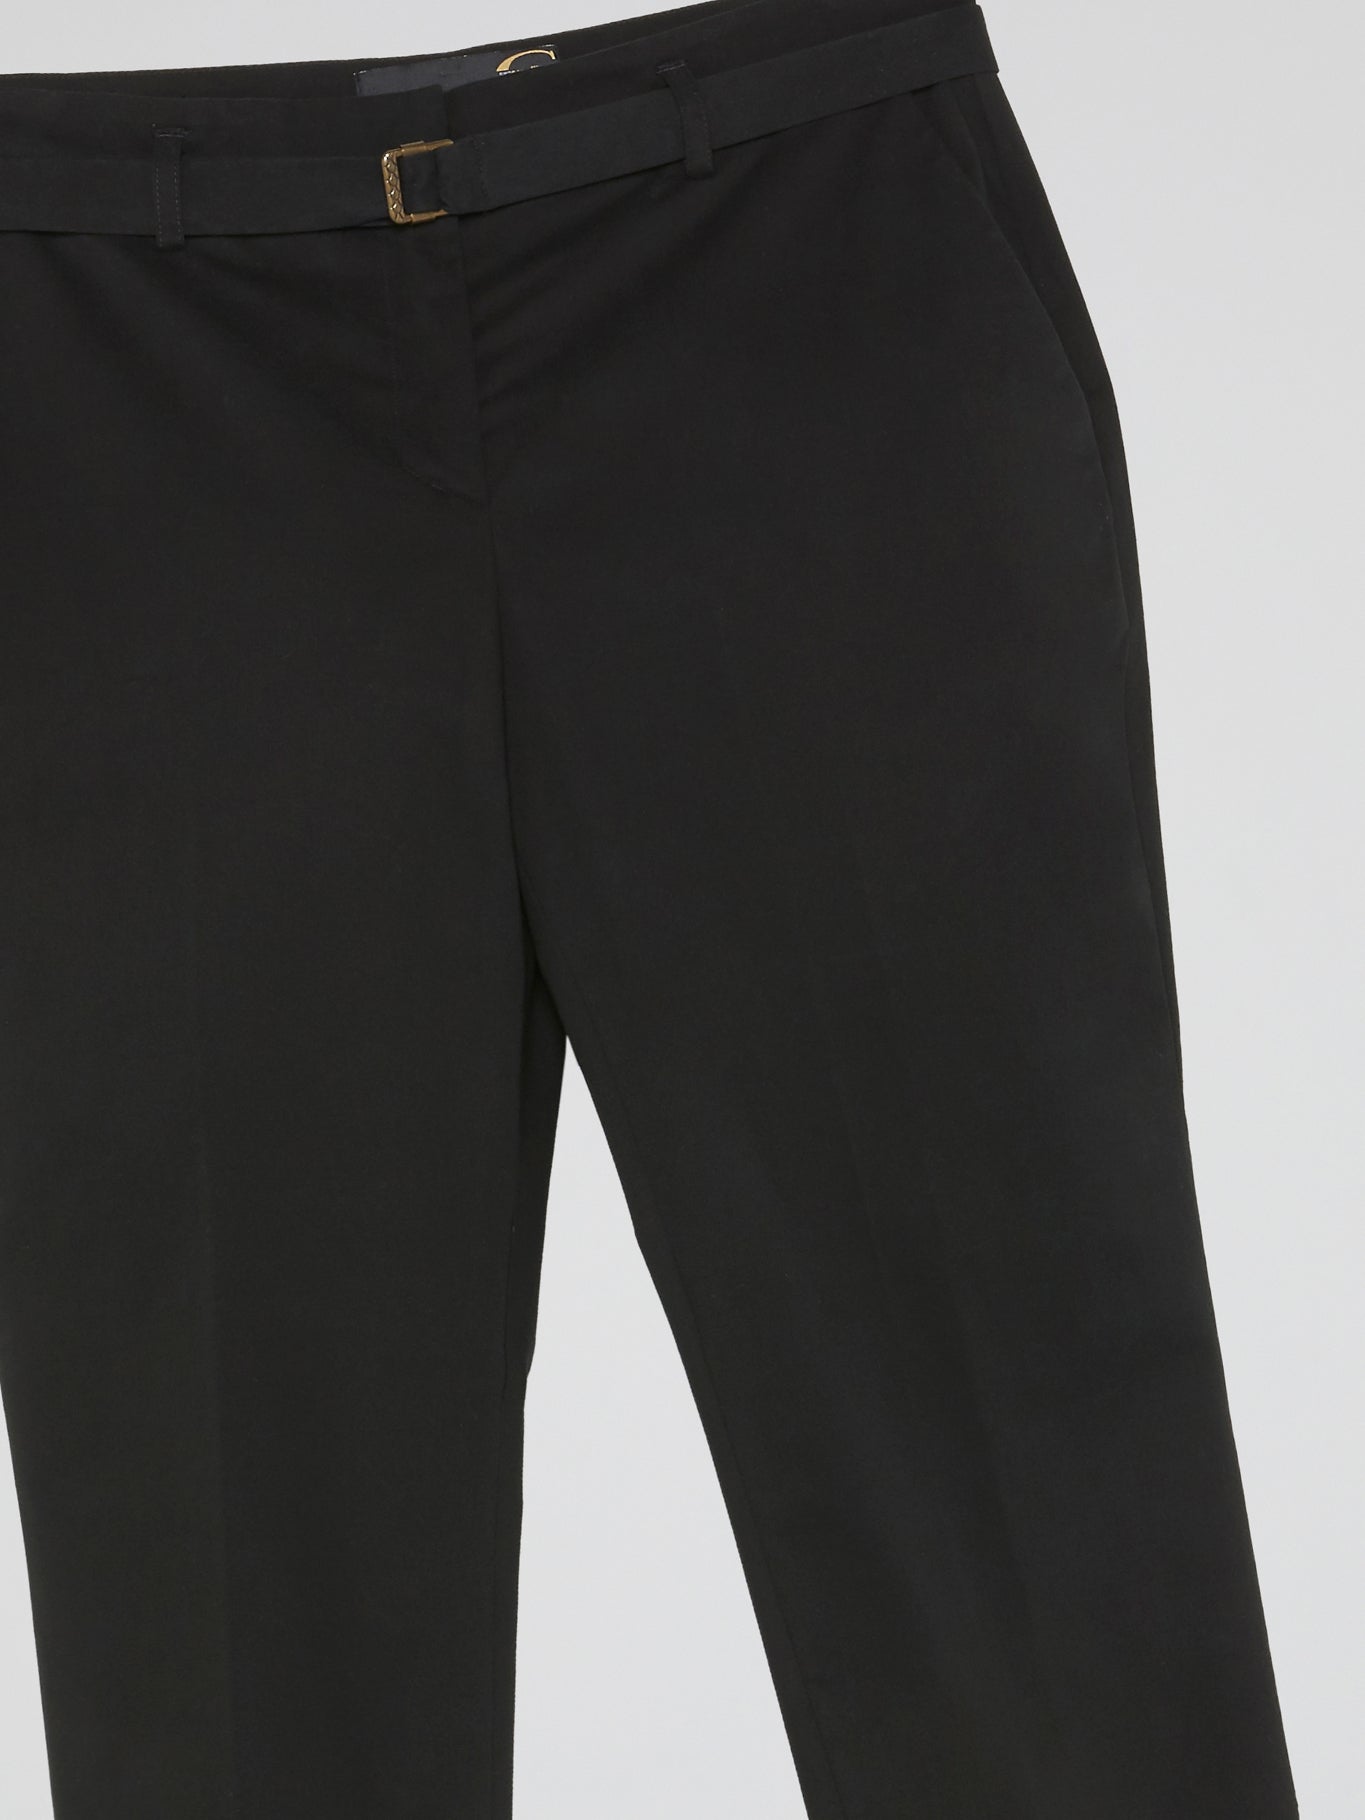 Black Belted Capri Pants